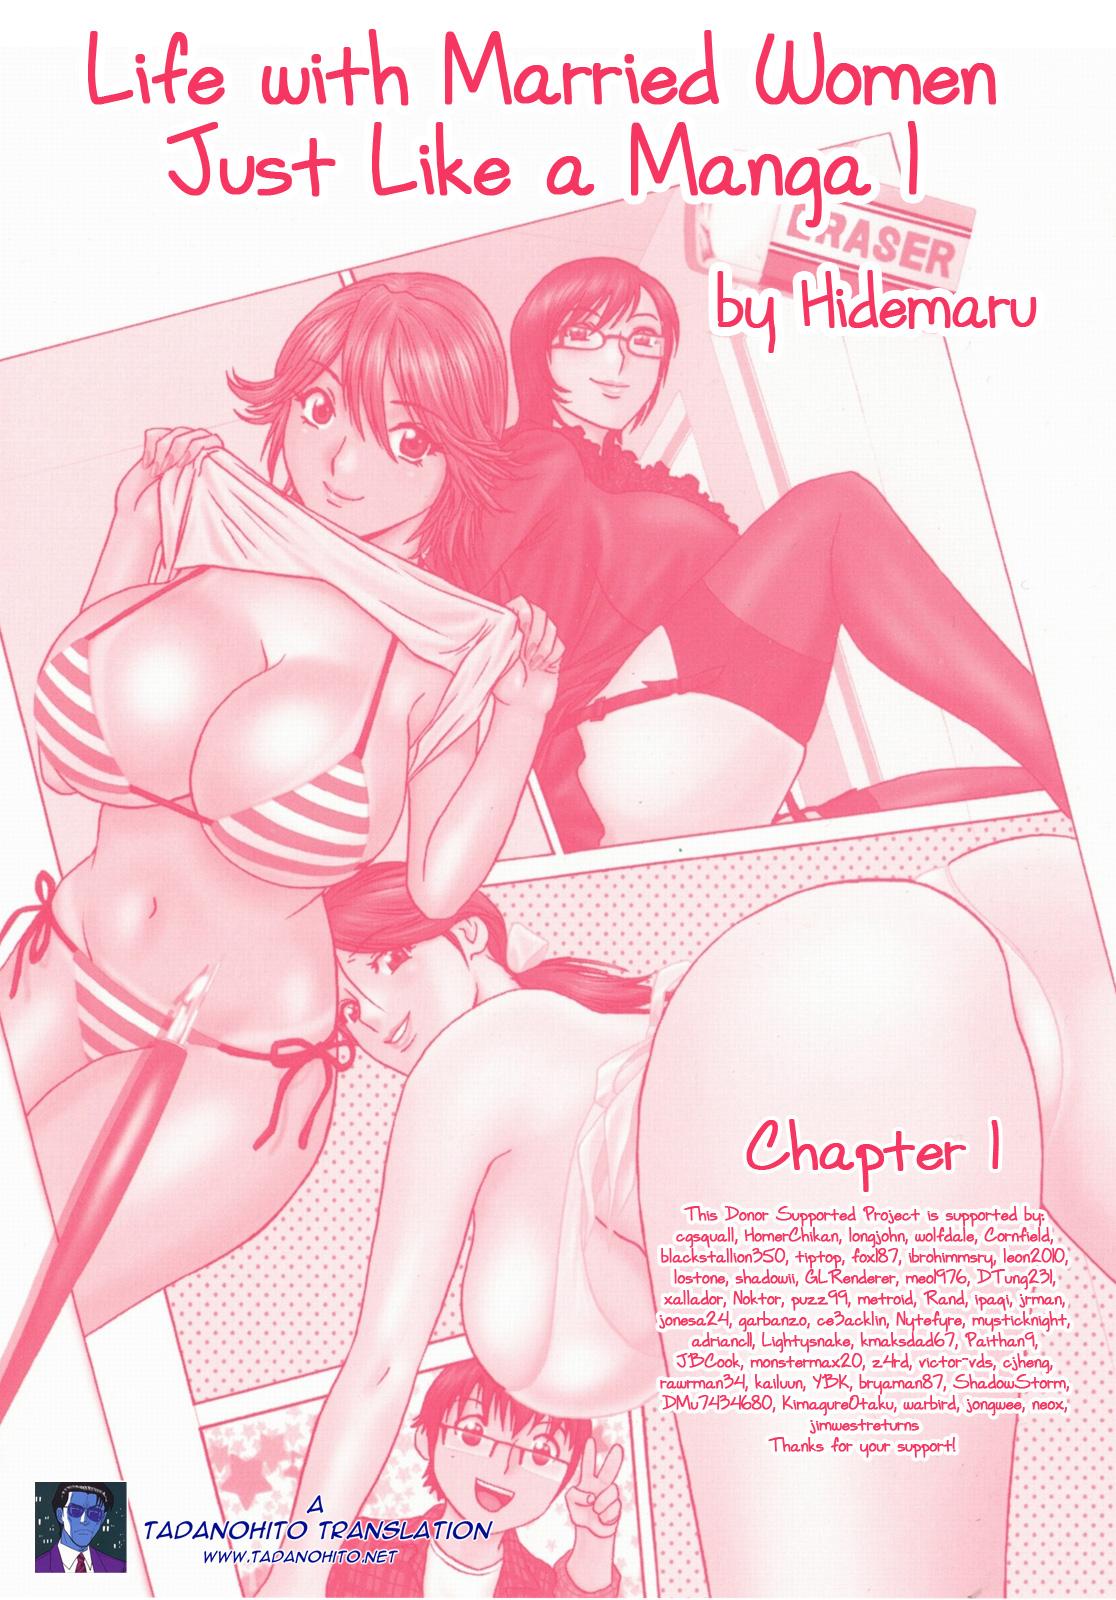 [Hidemaru] Life with Married Women Just Like a Manga 1 - Ch. 1-3 [English] {Tadanohito} 25